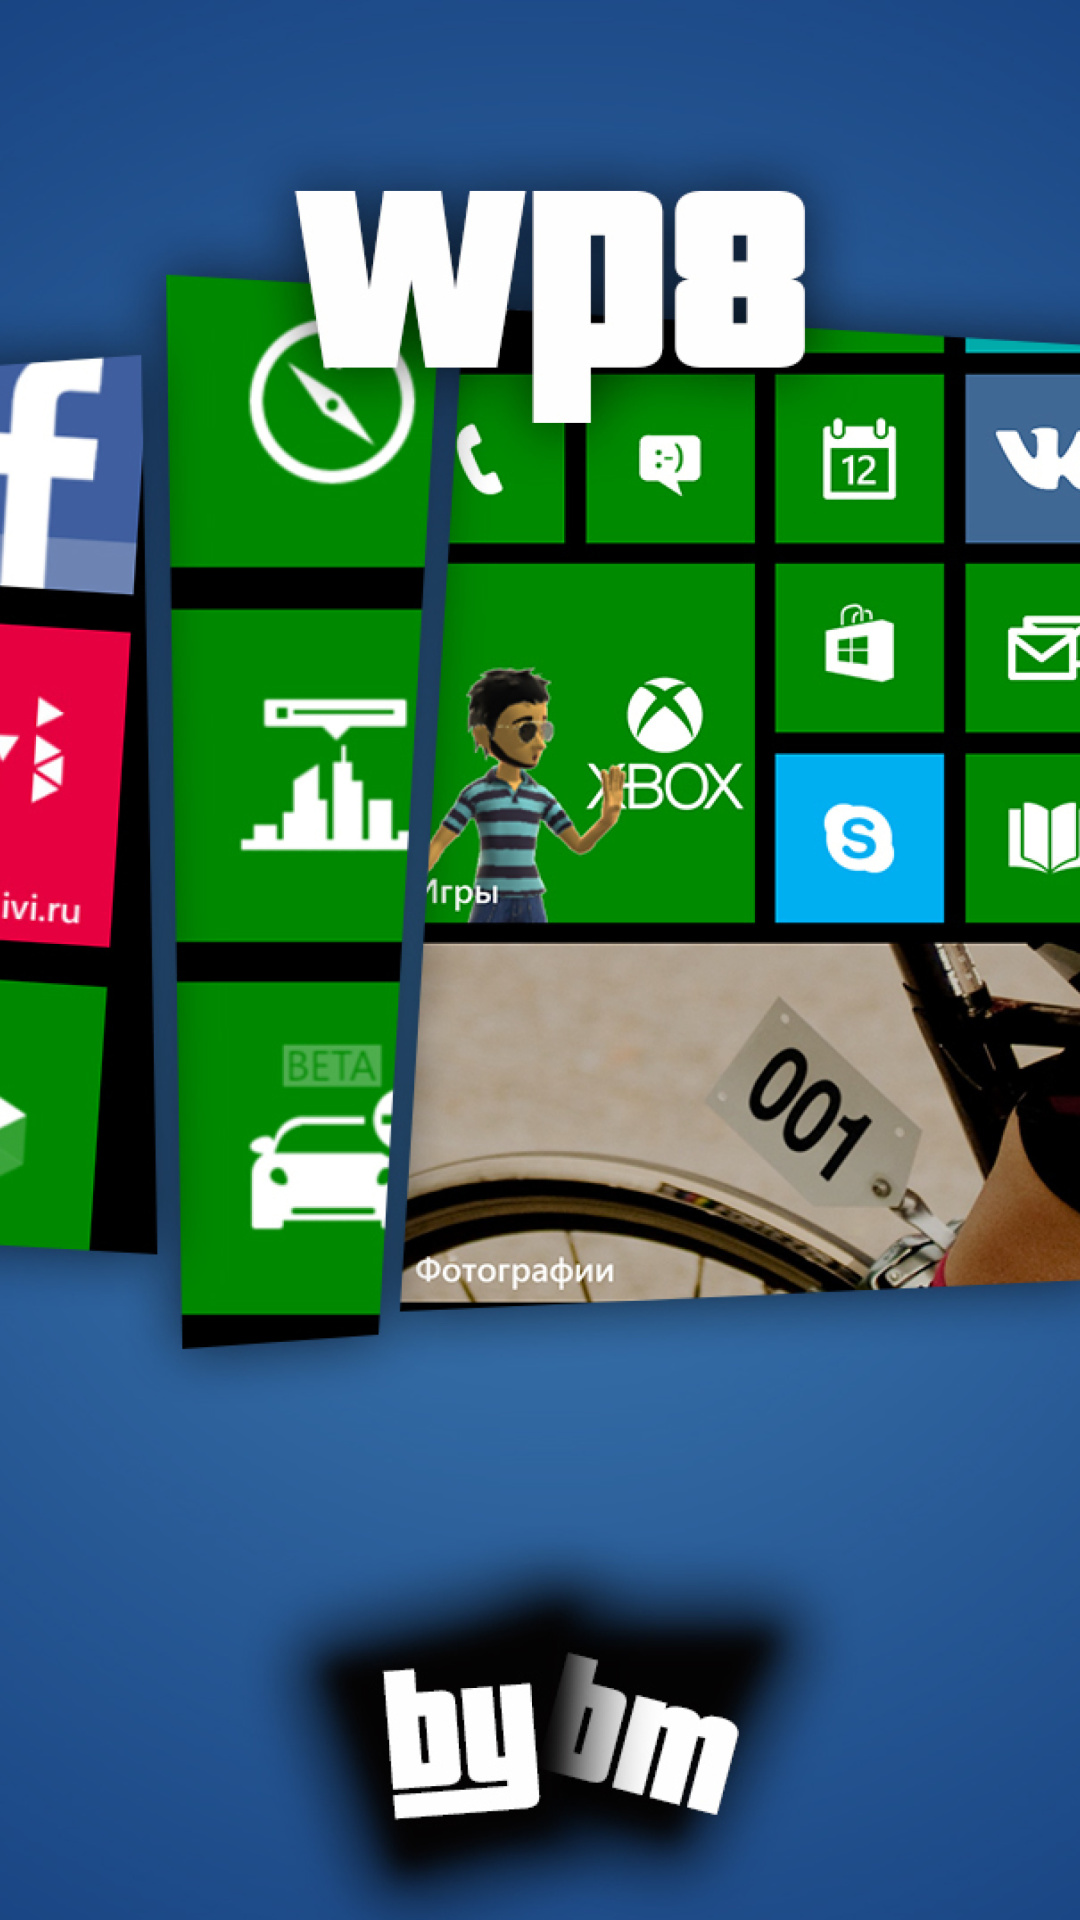 Sfondi Wp8, Windows Phone 8 1080x1920